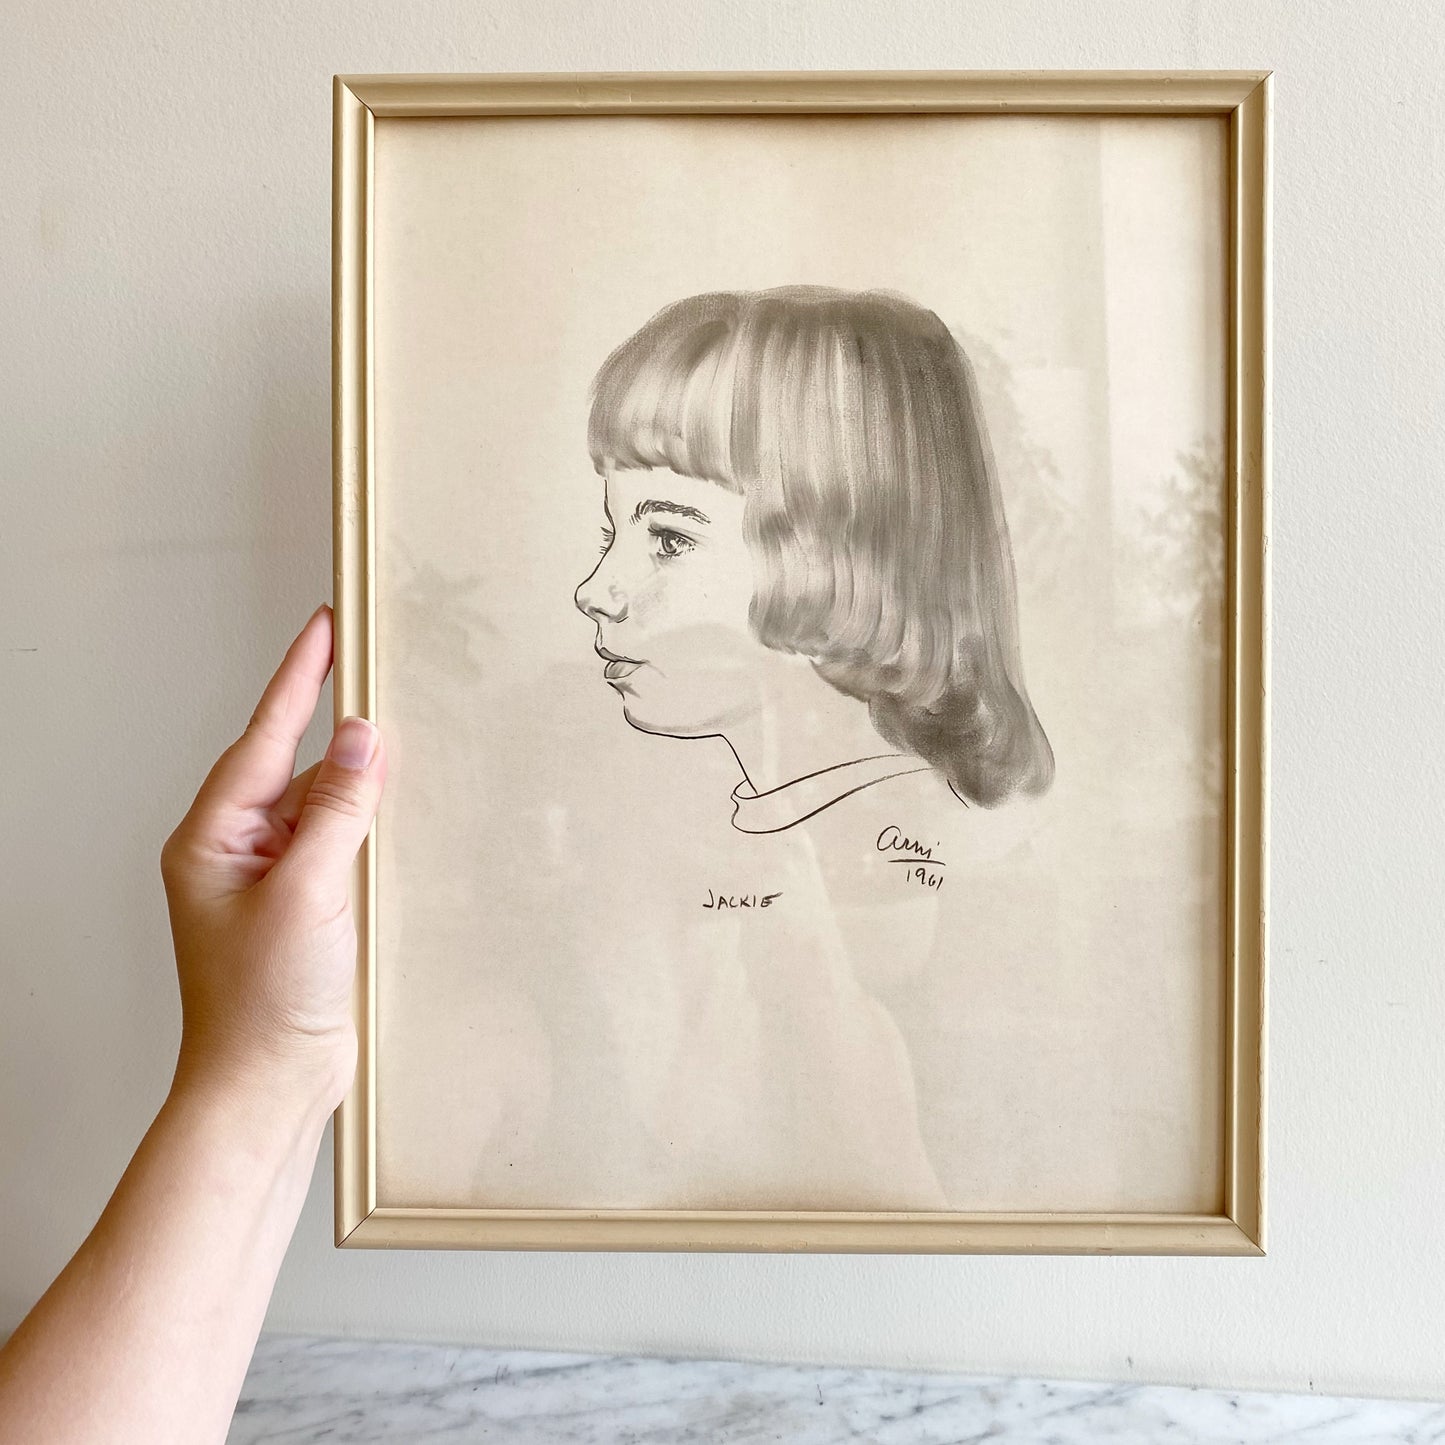 Vintage Original Portrait Drawing "Jackie", 1961